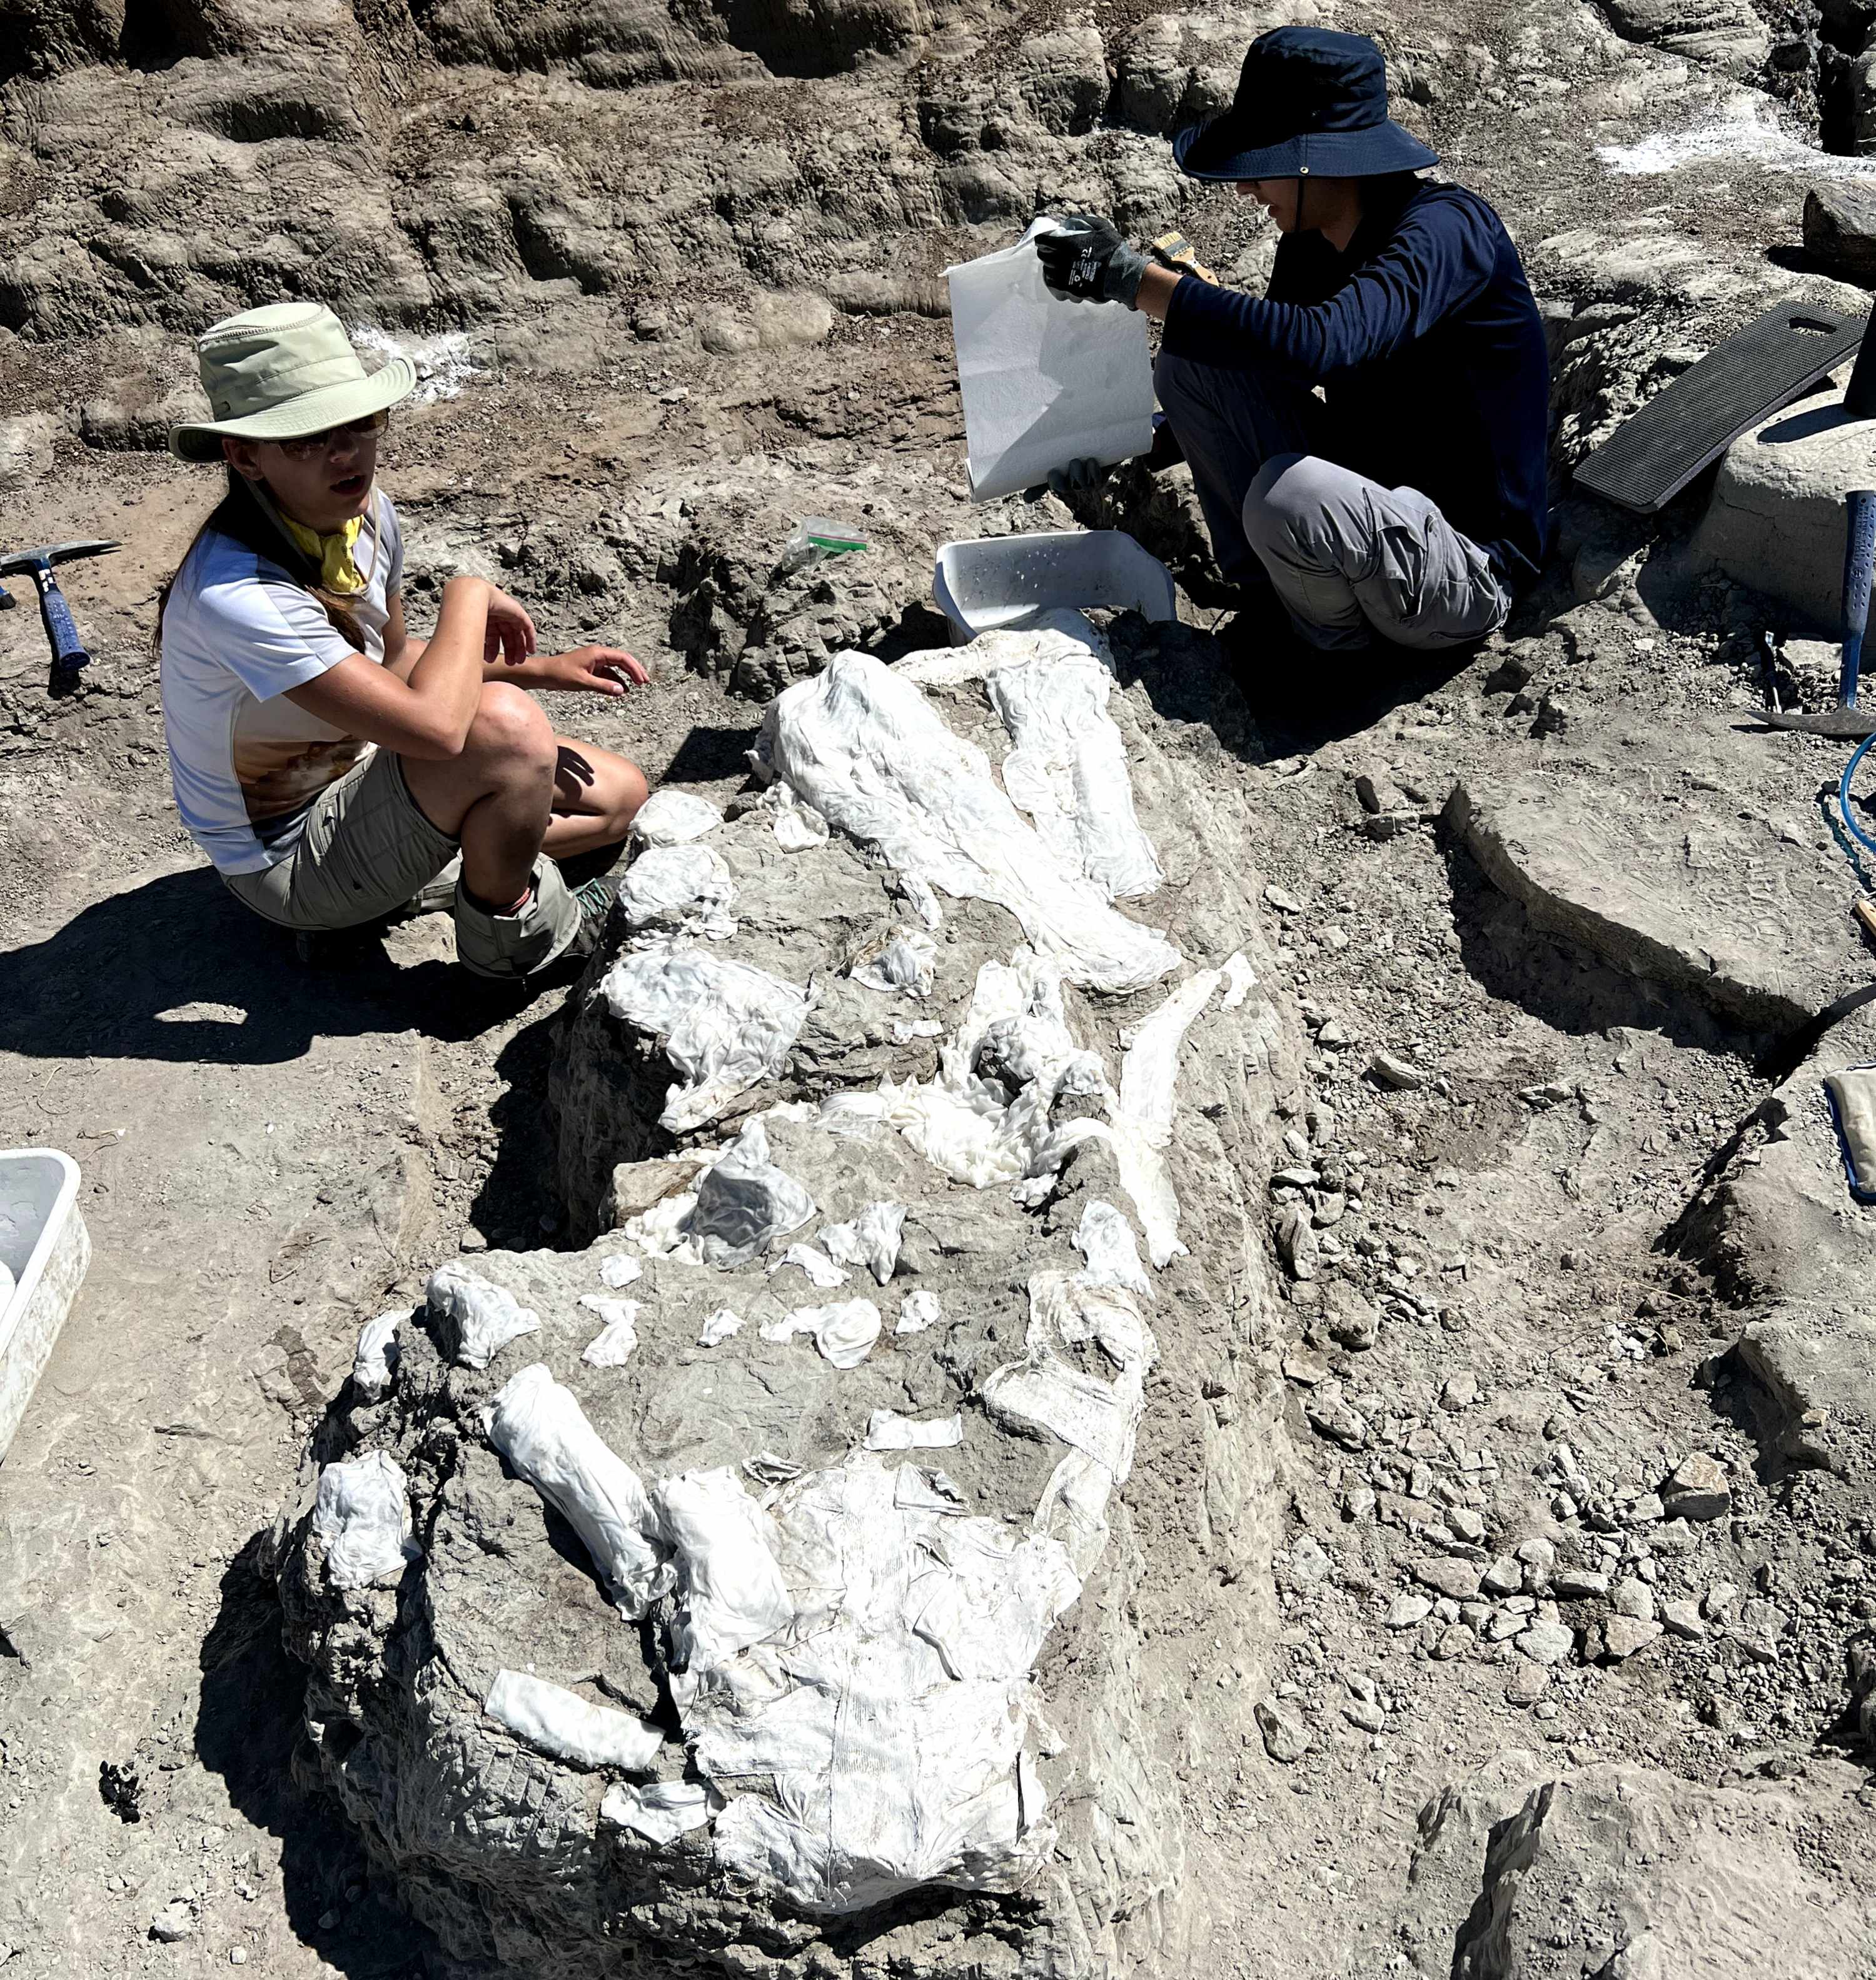 A dinosaur specimen at an excavation site.